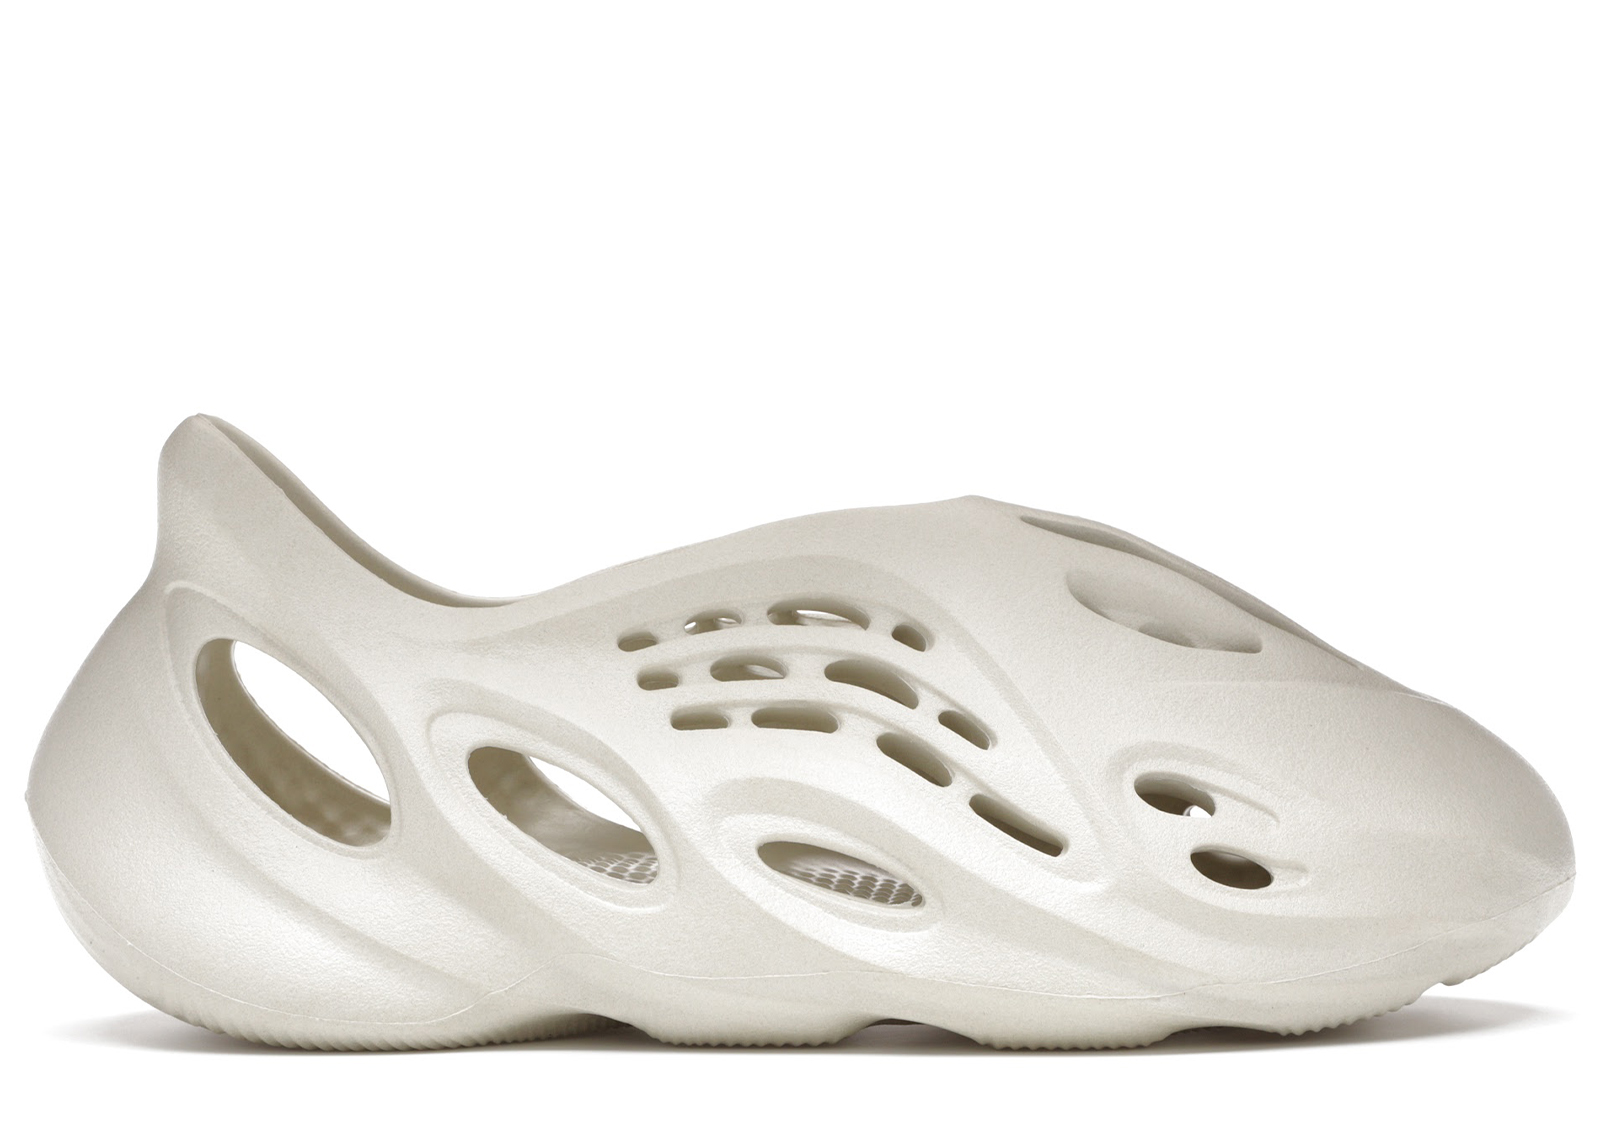 adidas YEEZY Foam Runner sand 26.5cm